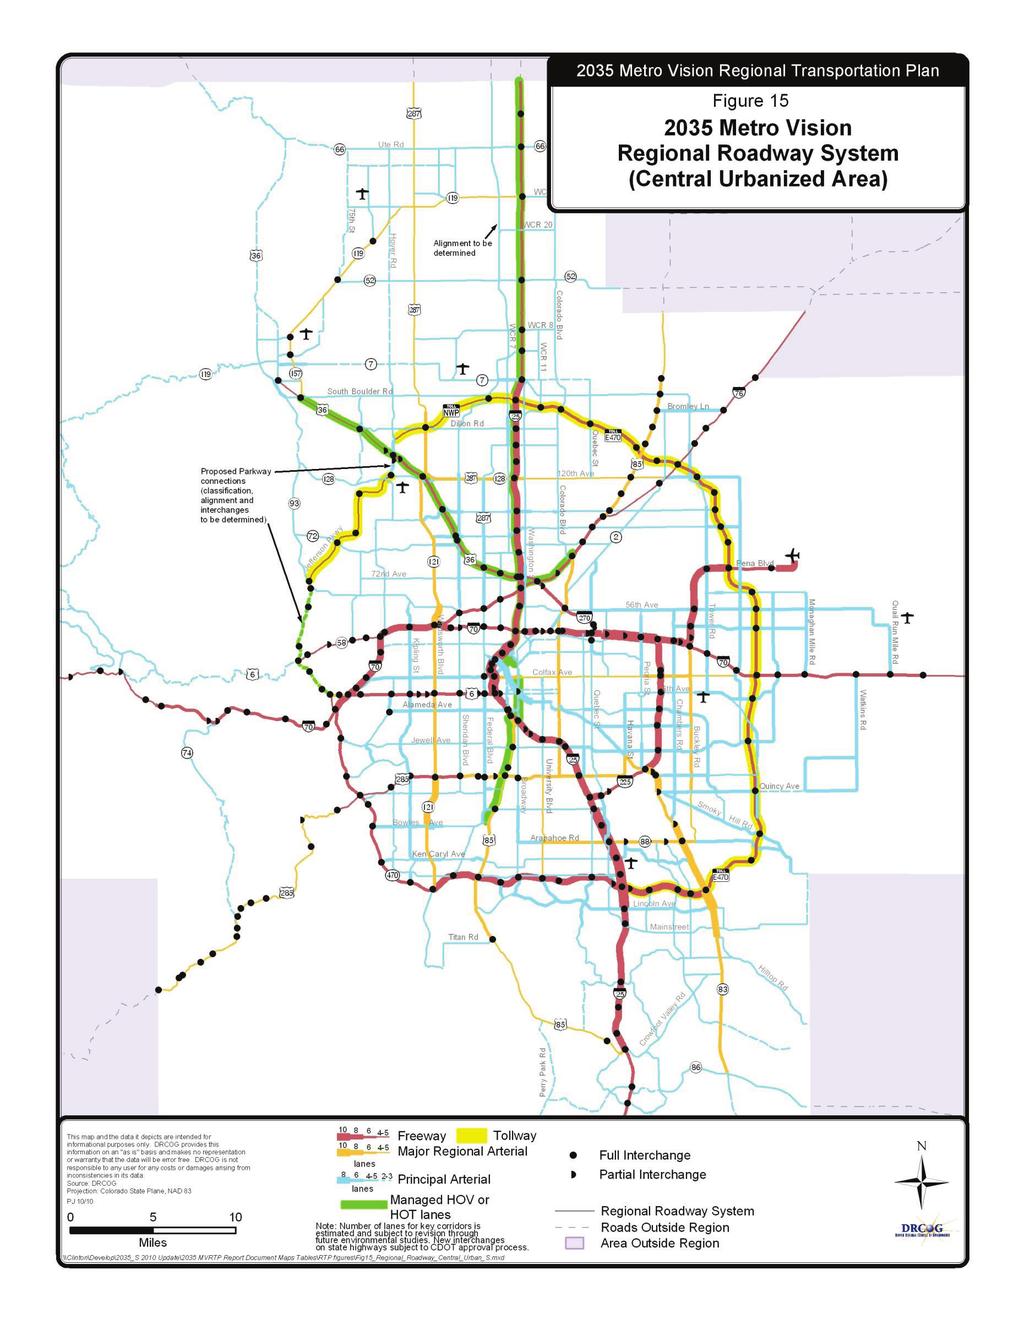 Figure 15 2035 Metro Vision Regional Roadway System (Central Urbanized